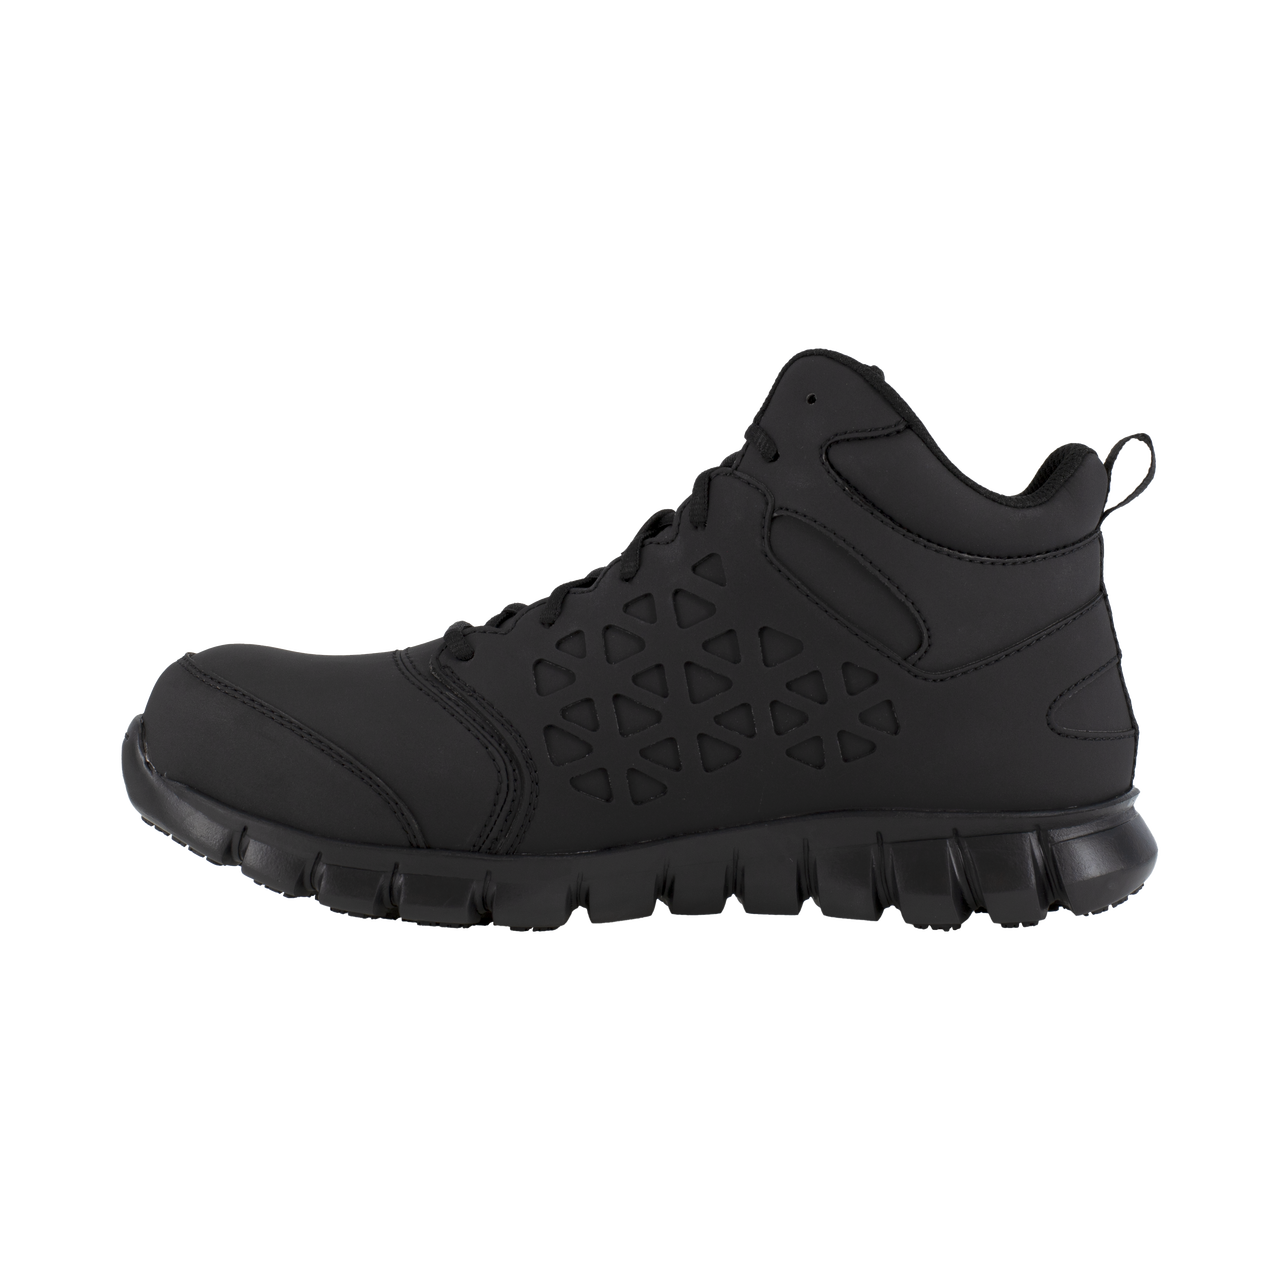 RB4059  6 inch SUBLITE CUSHION Composite Toe  WORK Sneaker (Black)